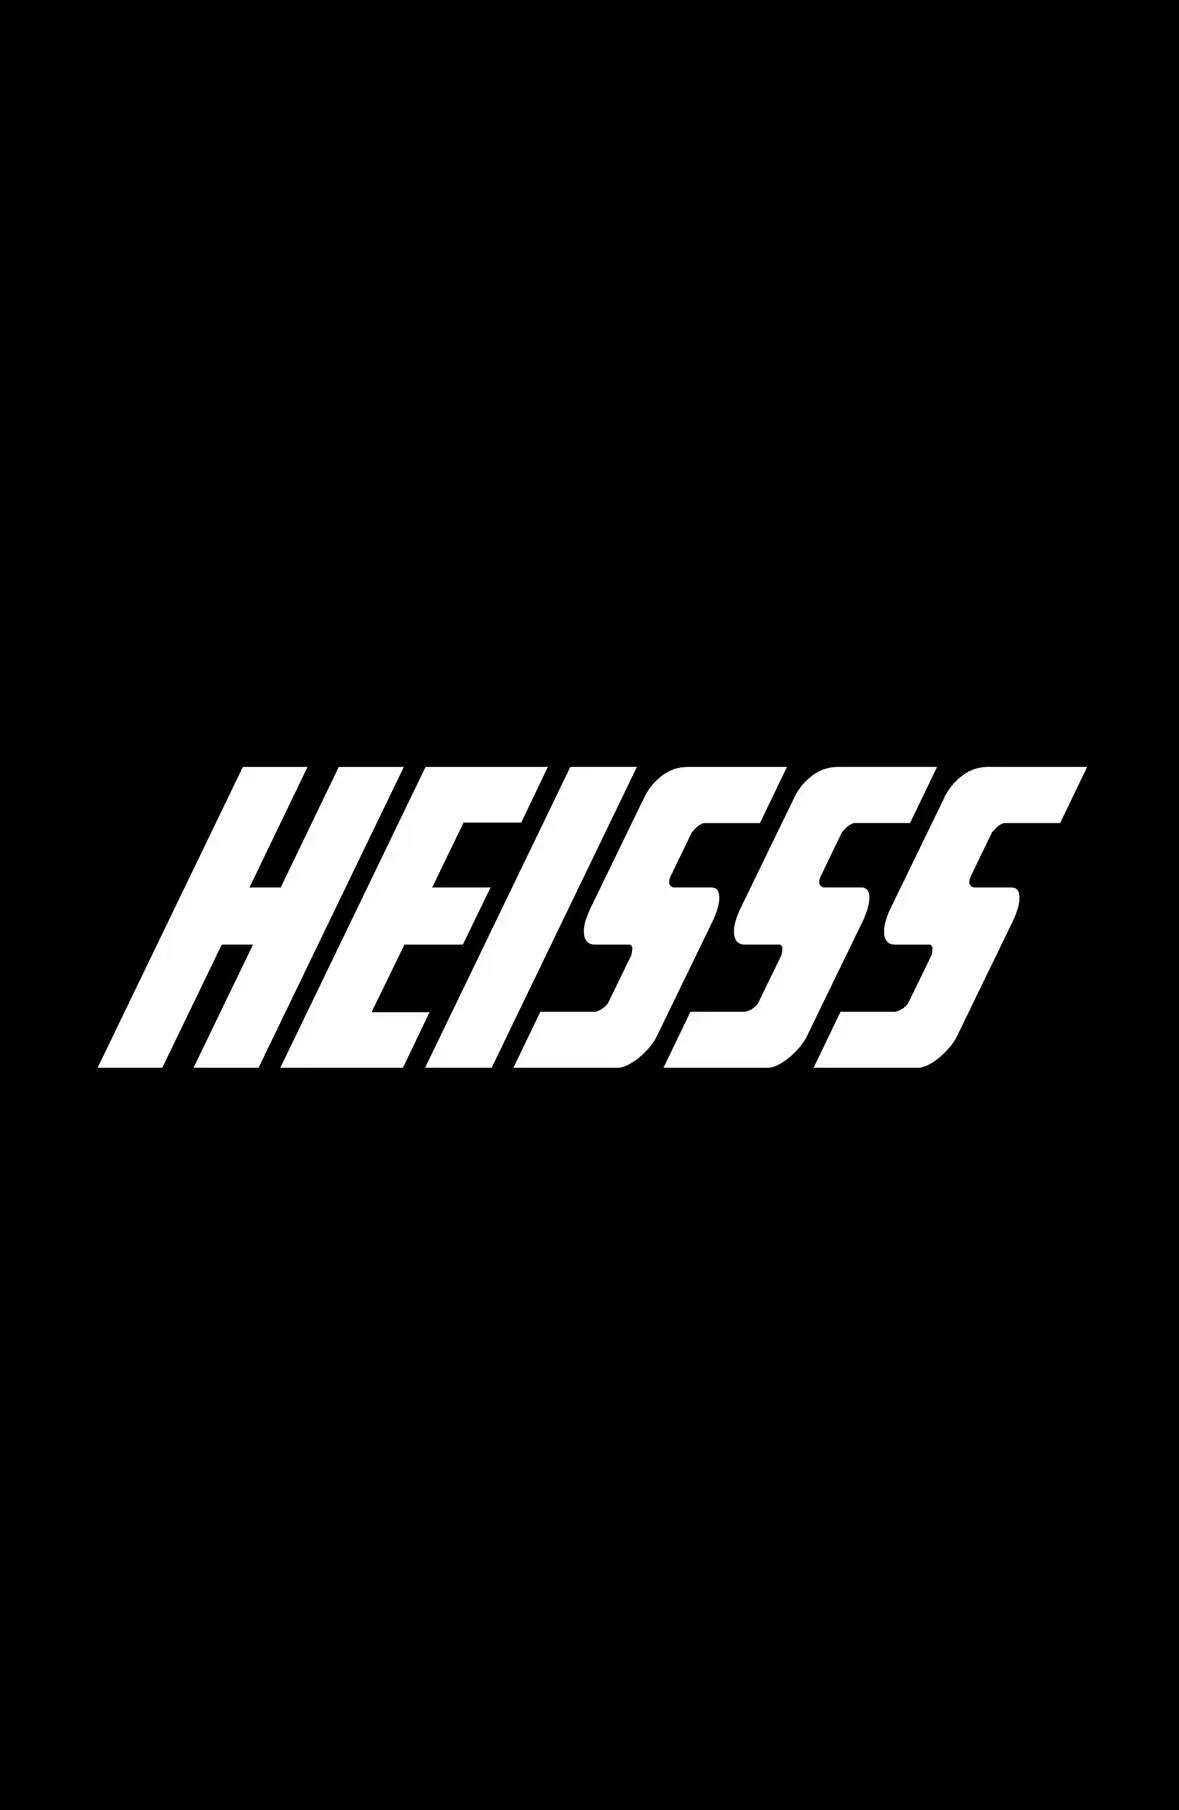 HEISSS - フライヤー表